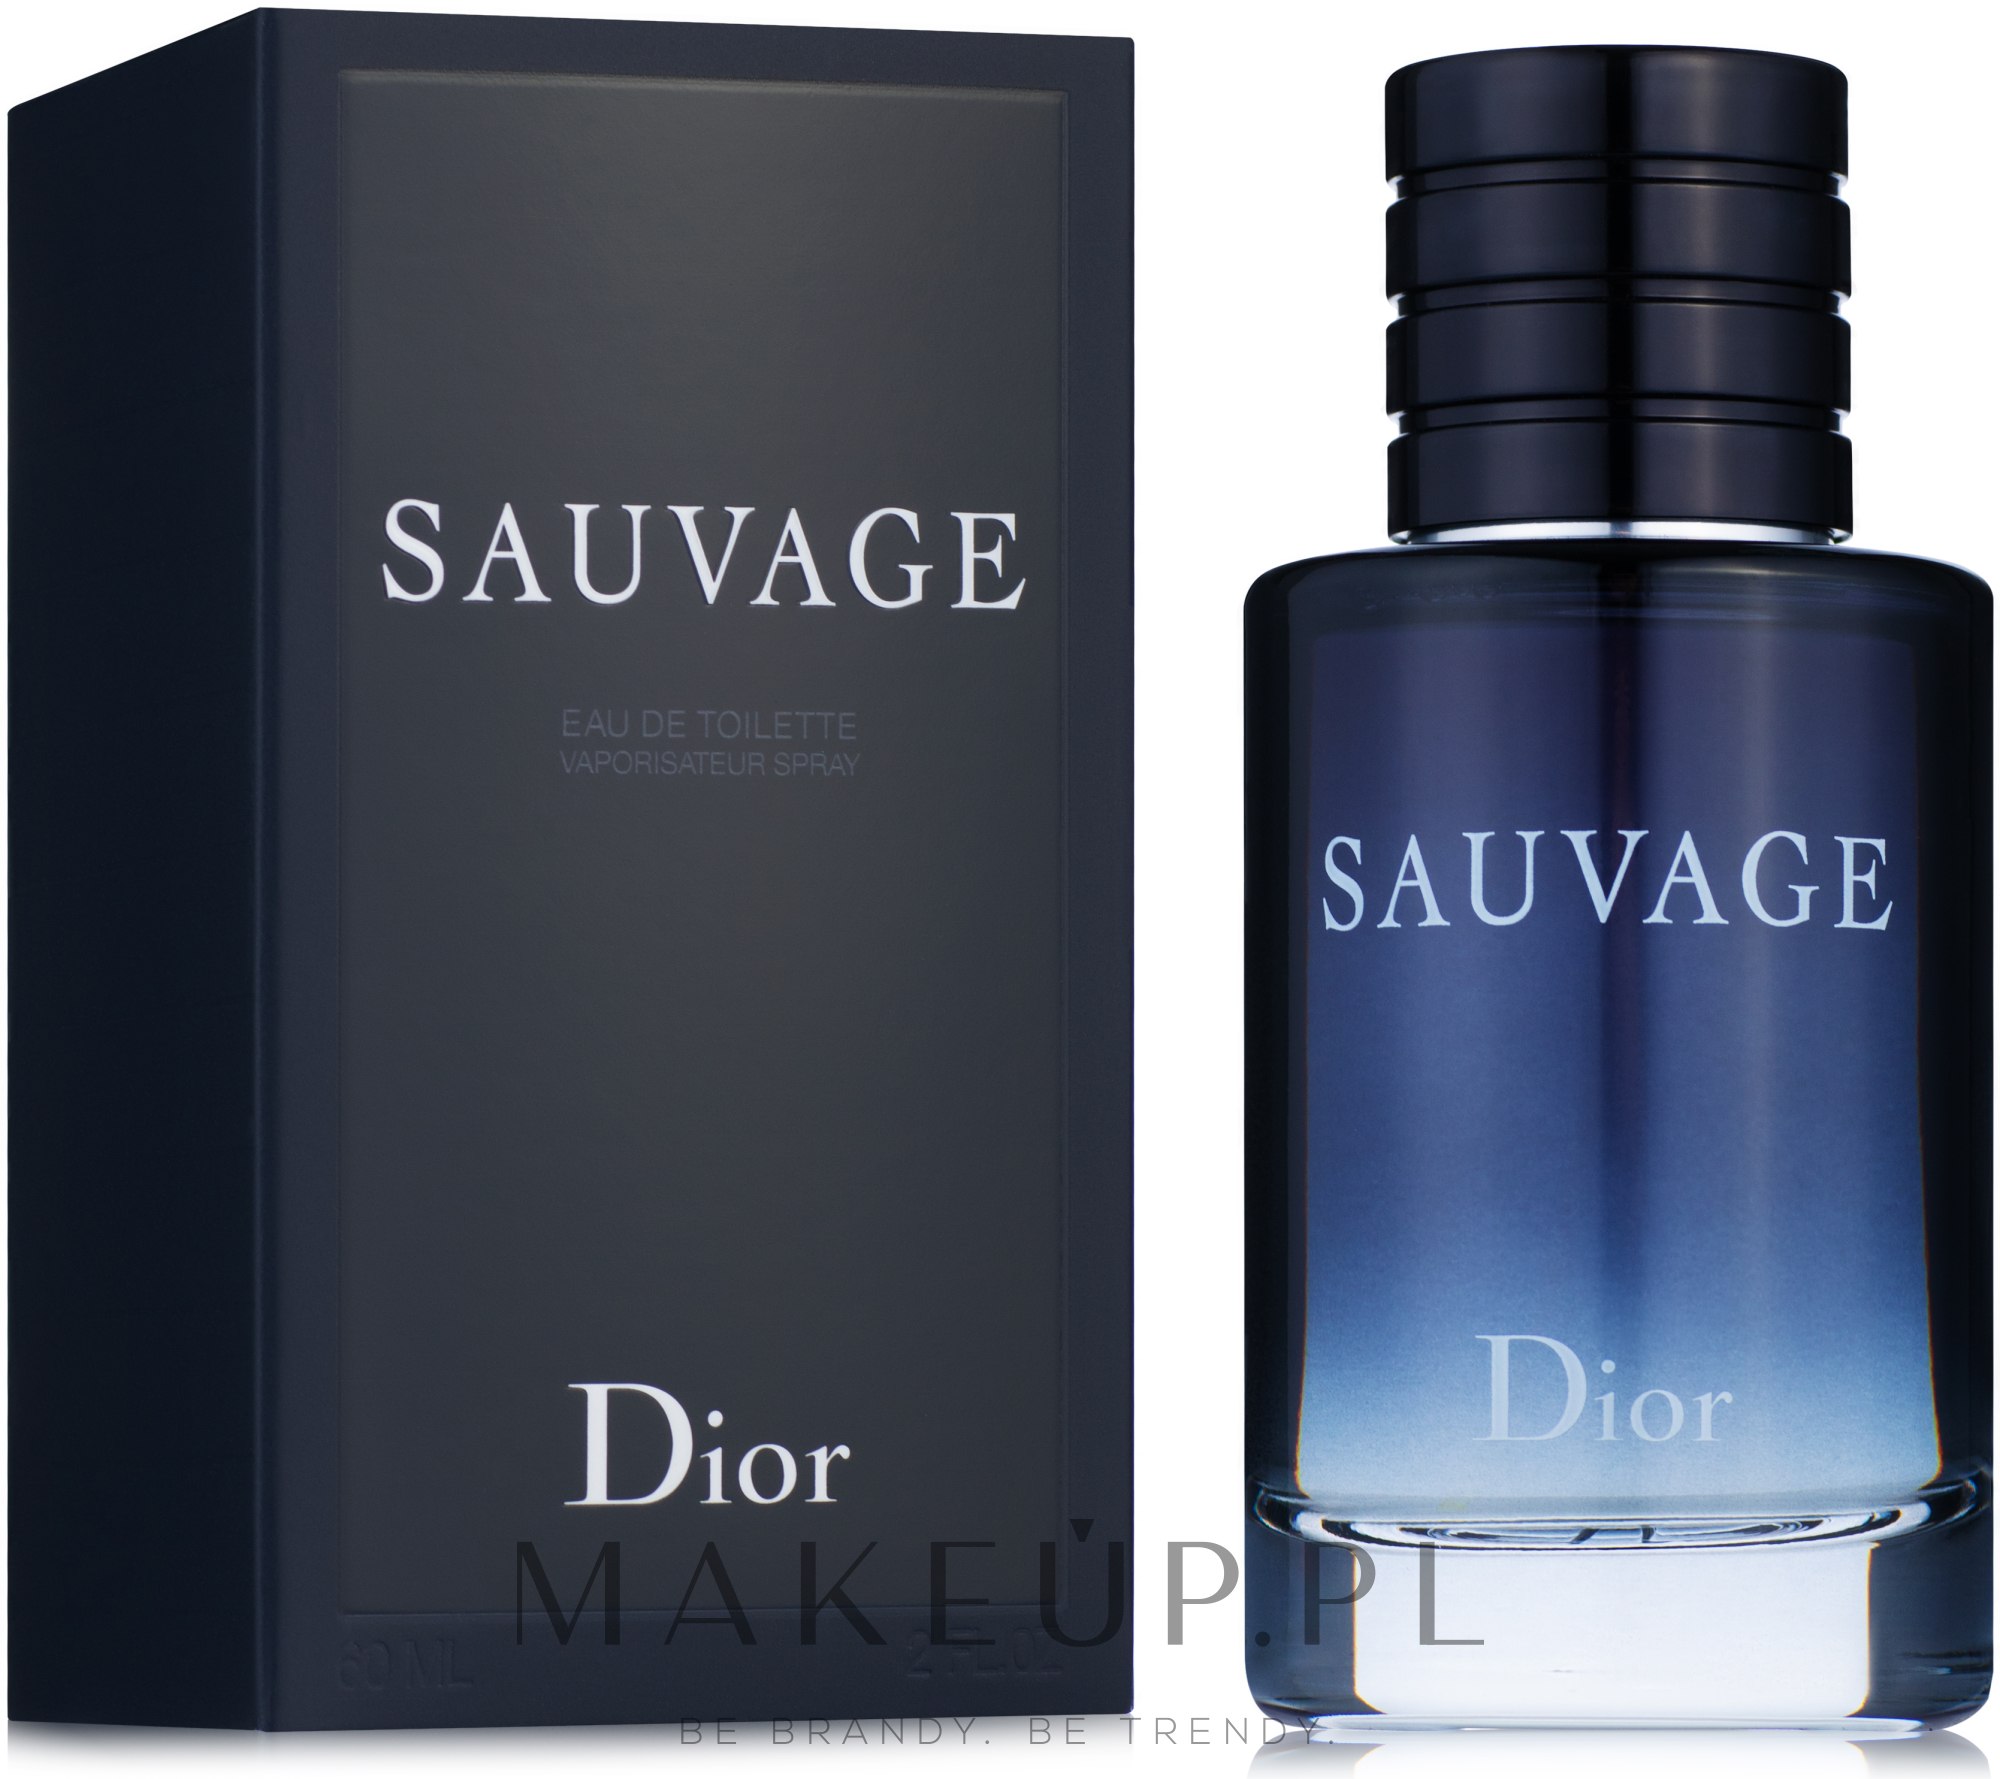 Dior Sauvage Woda Toaletowa Makeup Pl